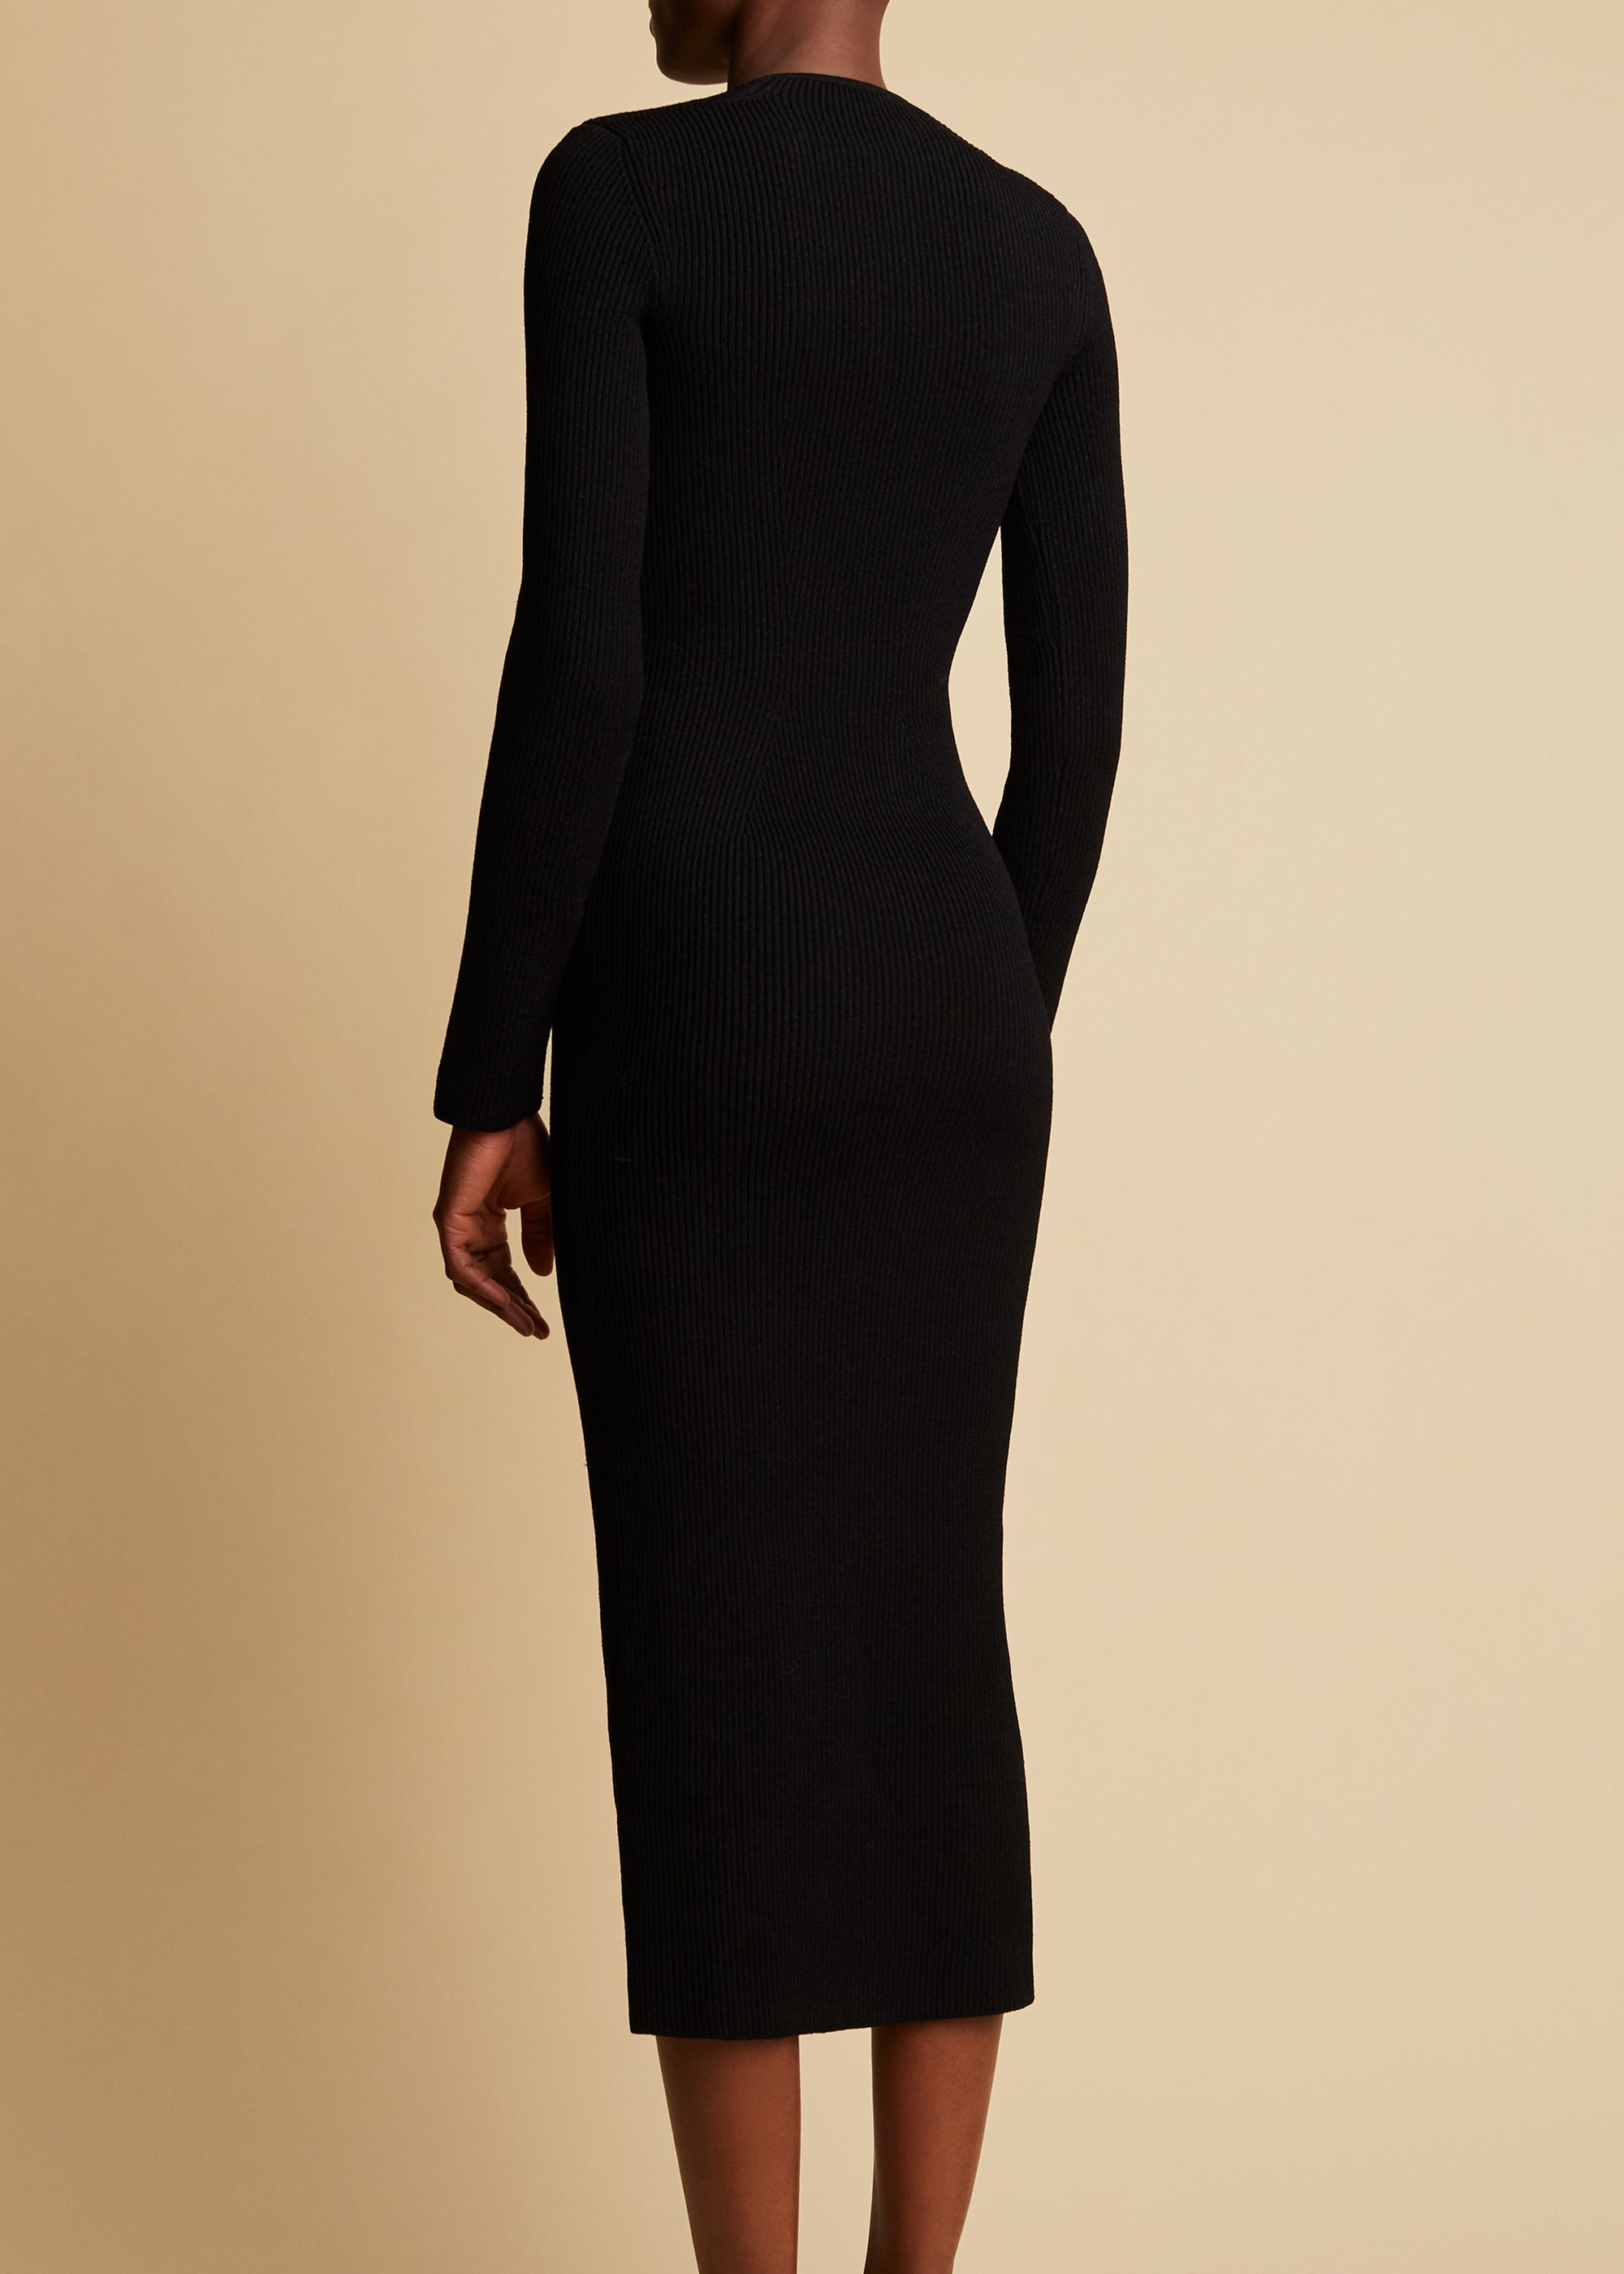 Alessandra dress - Black